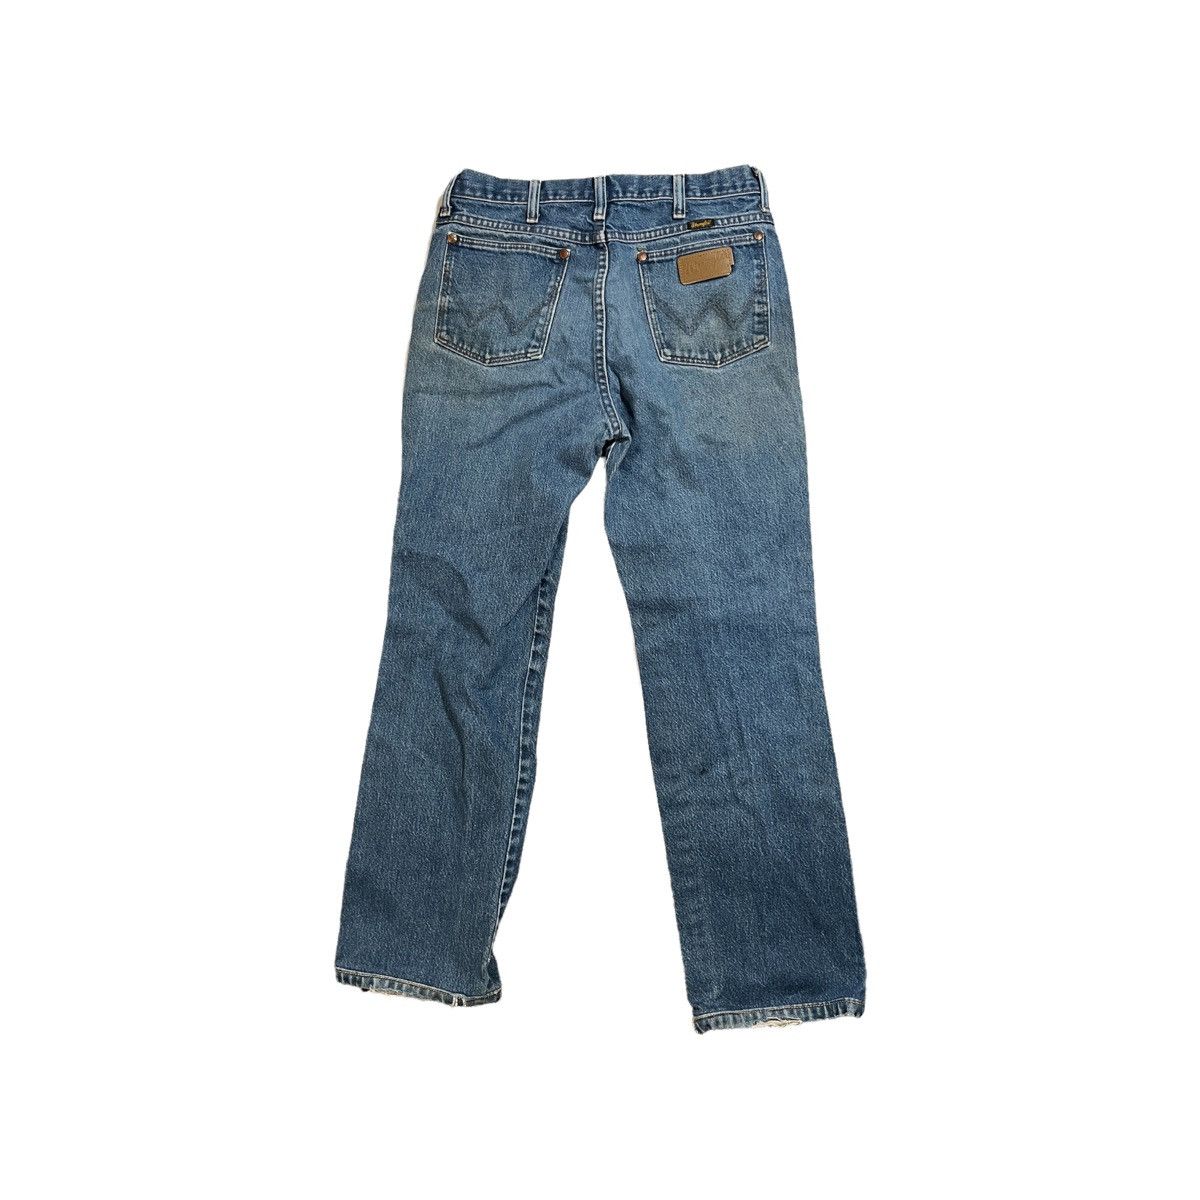 Vintage Vintage Wrangler 936DEN Patched Jeans Size US 31 - 5 Thumbnail